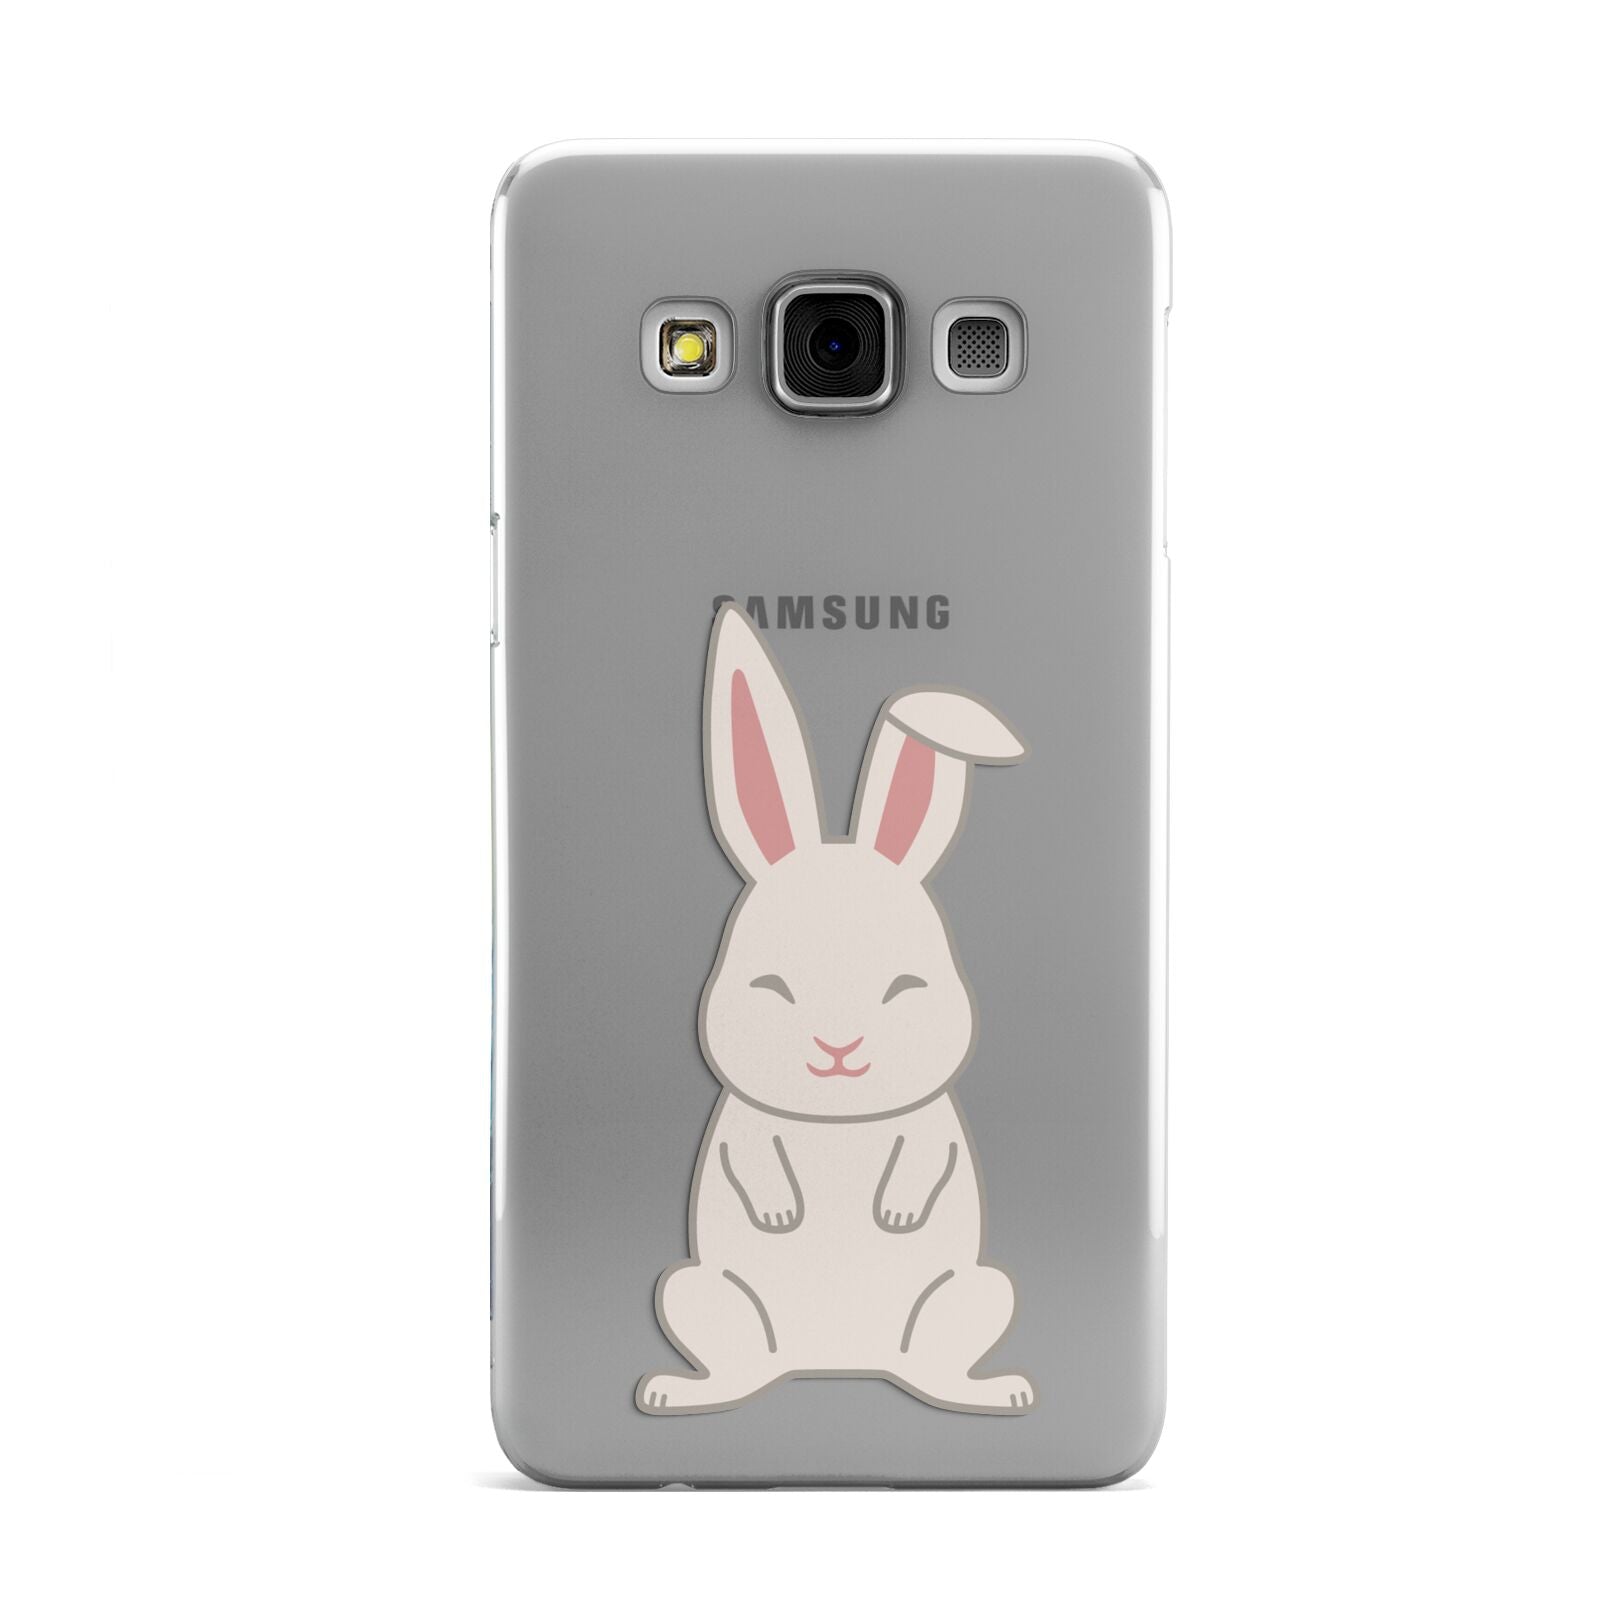 Bunny Samsung Galaxy A3 Case